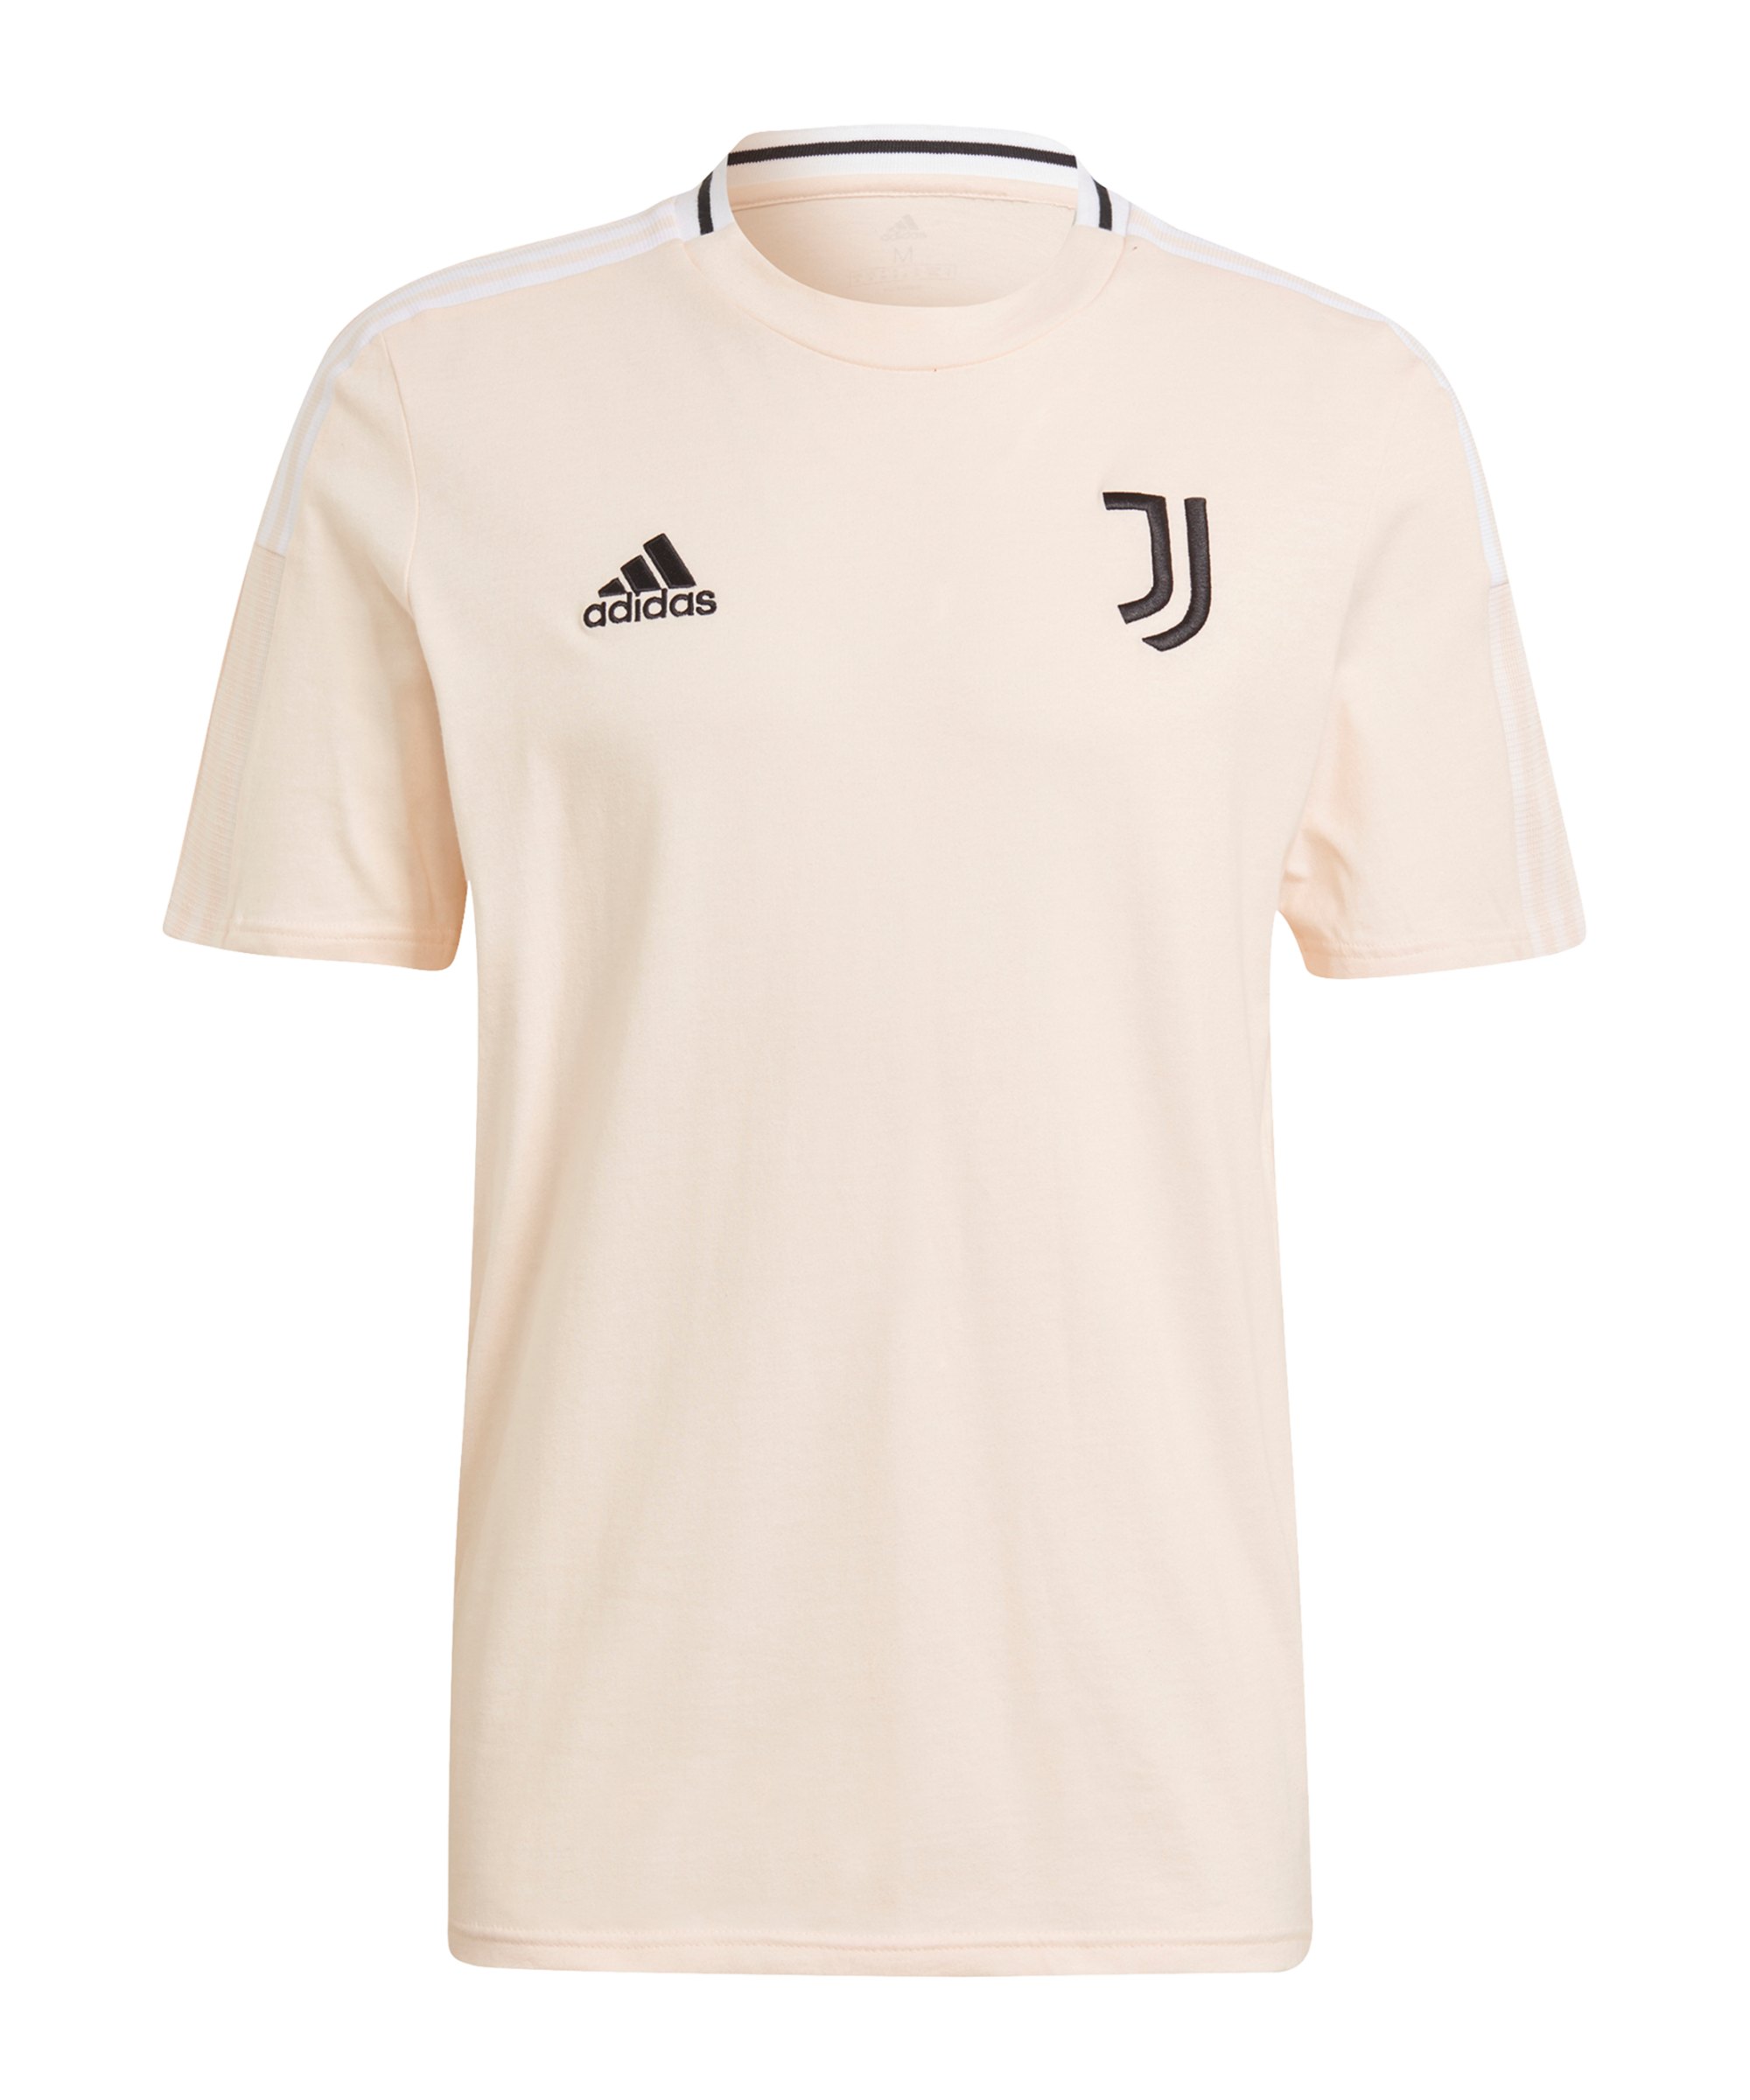 adidas Juventus Turin T-Shirt Rosa - rosa